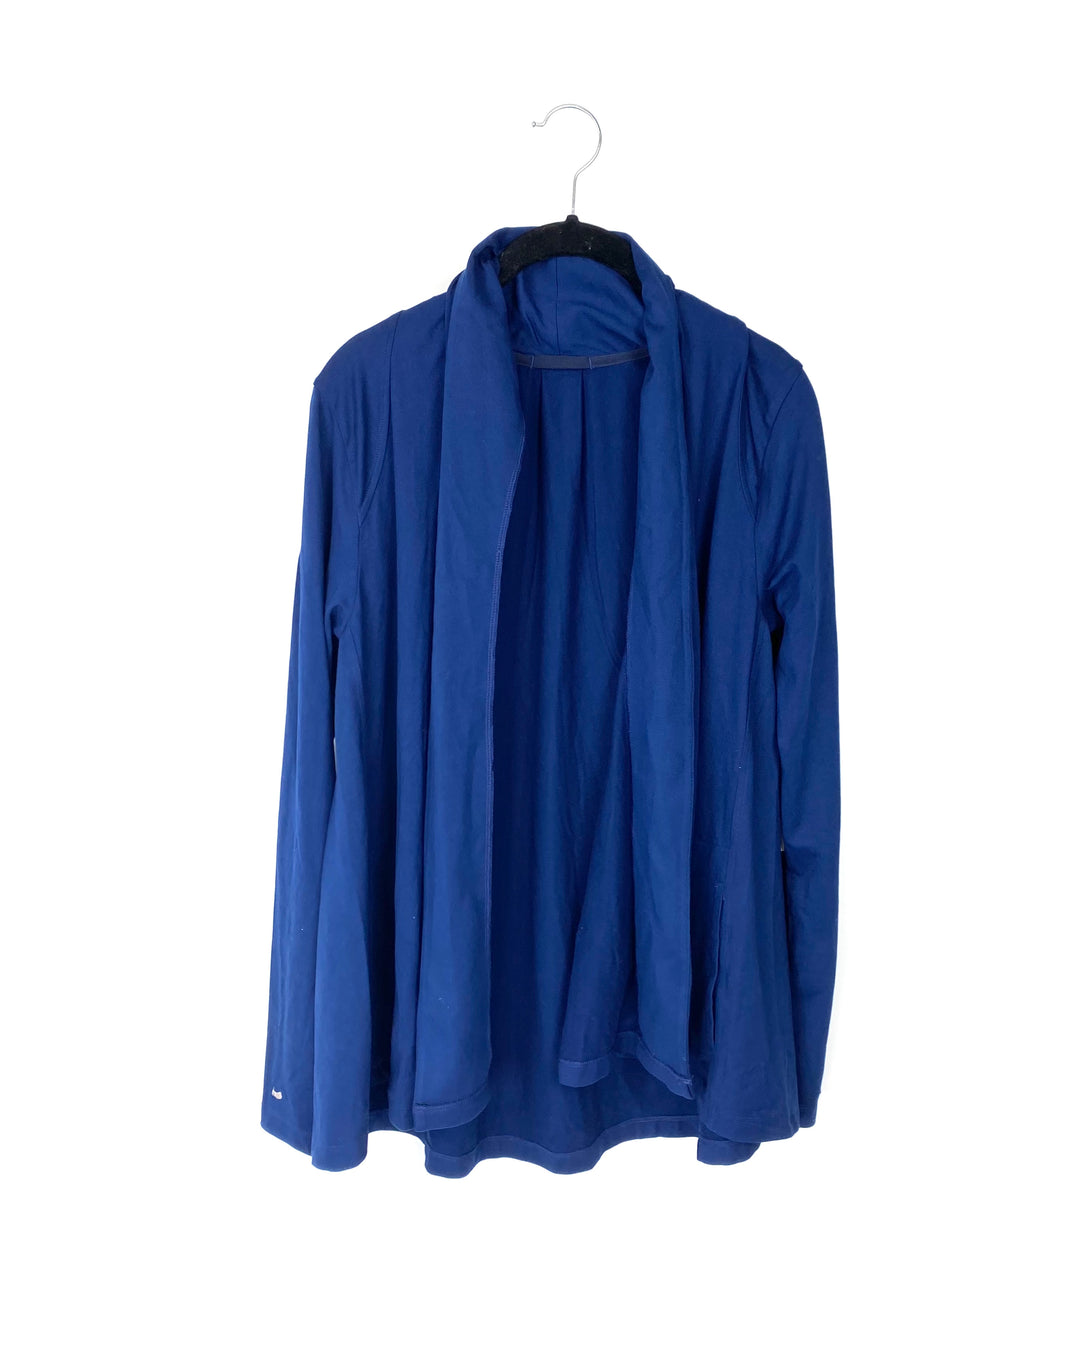 Navy Blue Long Sleeve Open Cardigan - Small, Medium, 1X